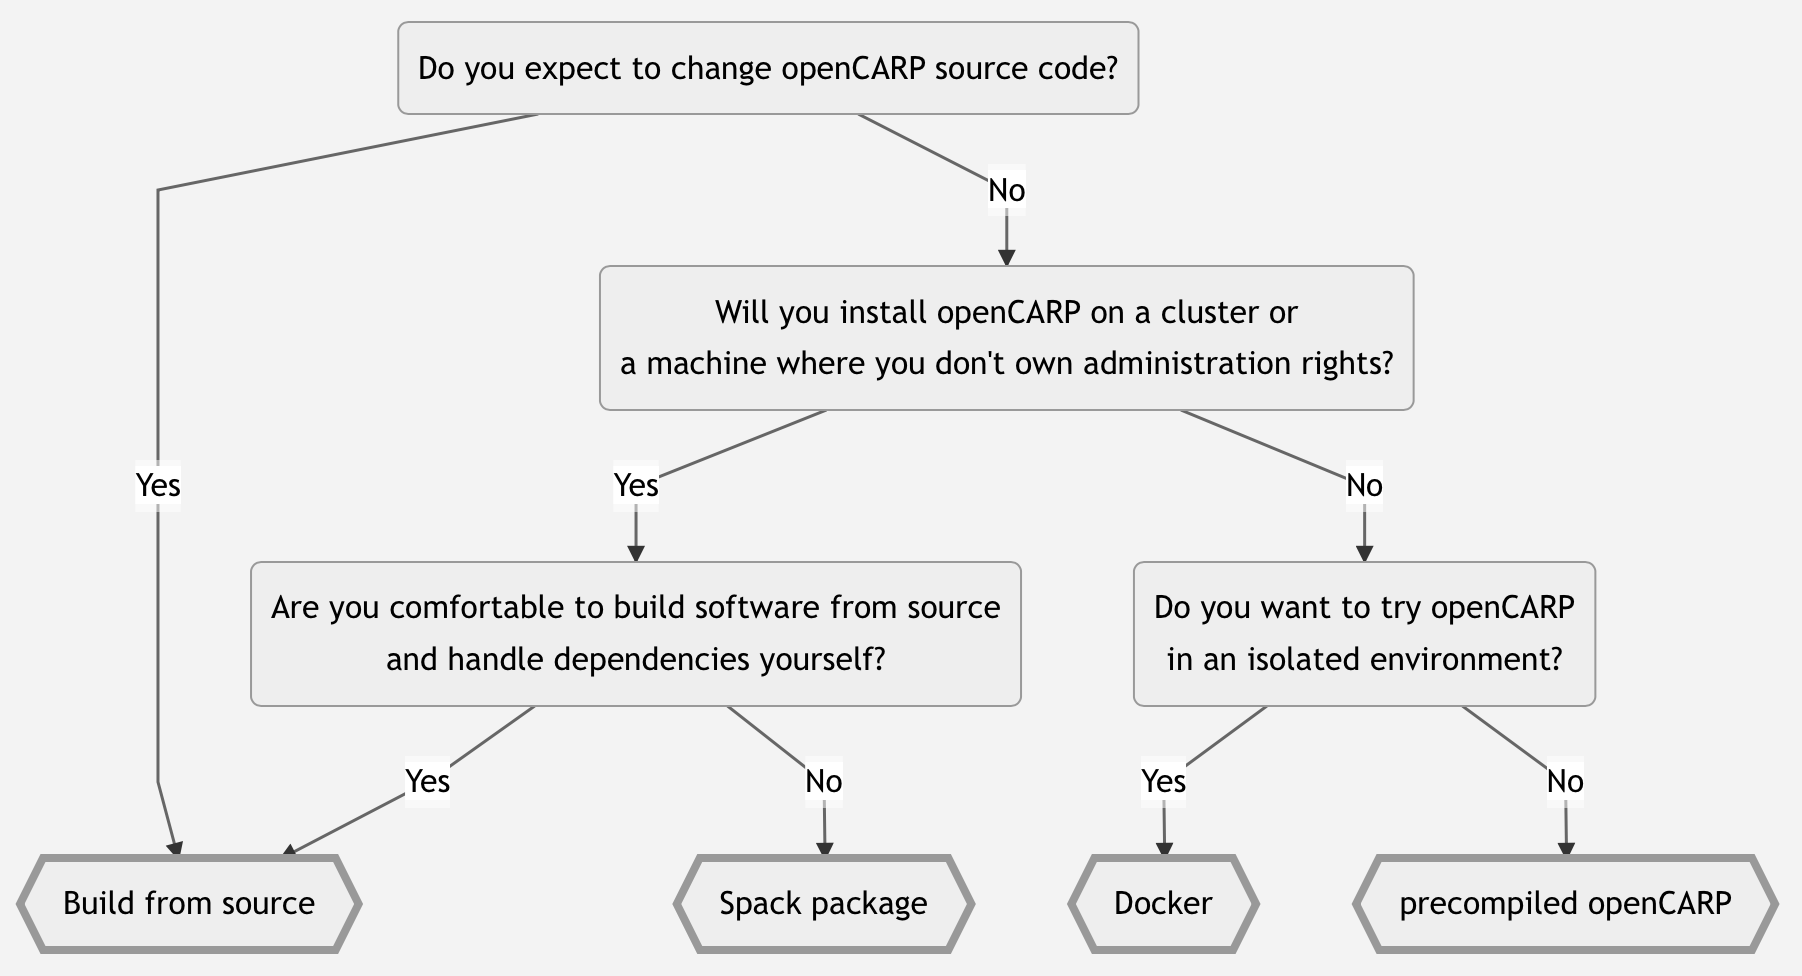 openCARP installation decision tree